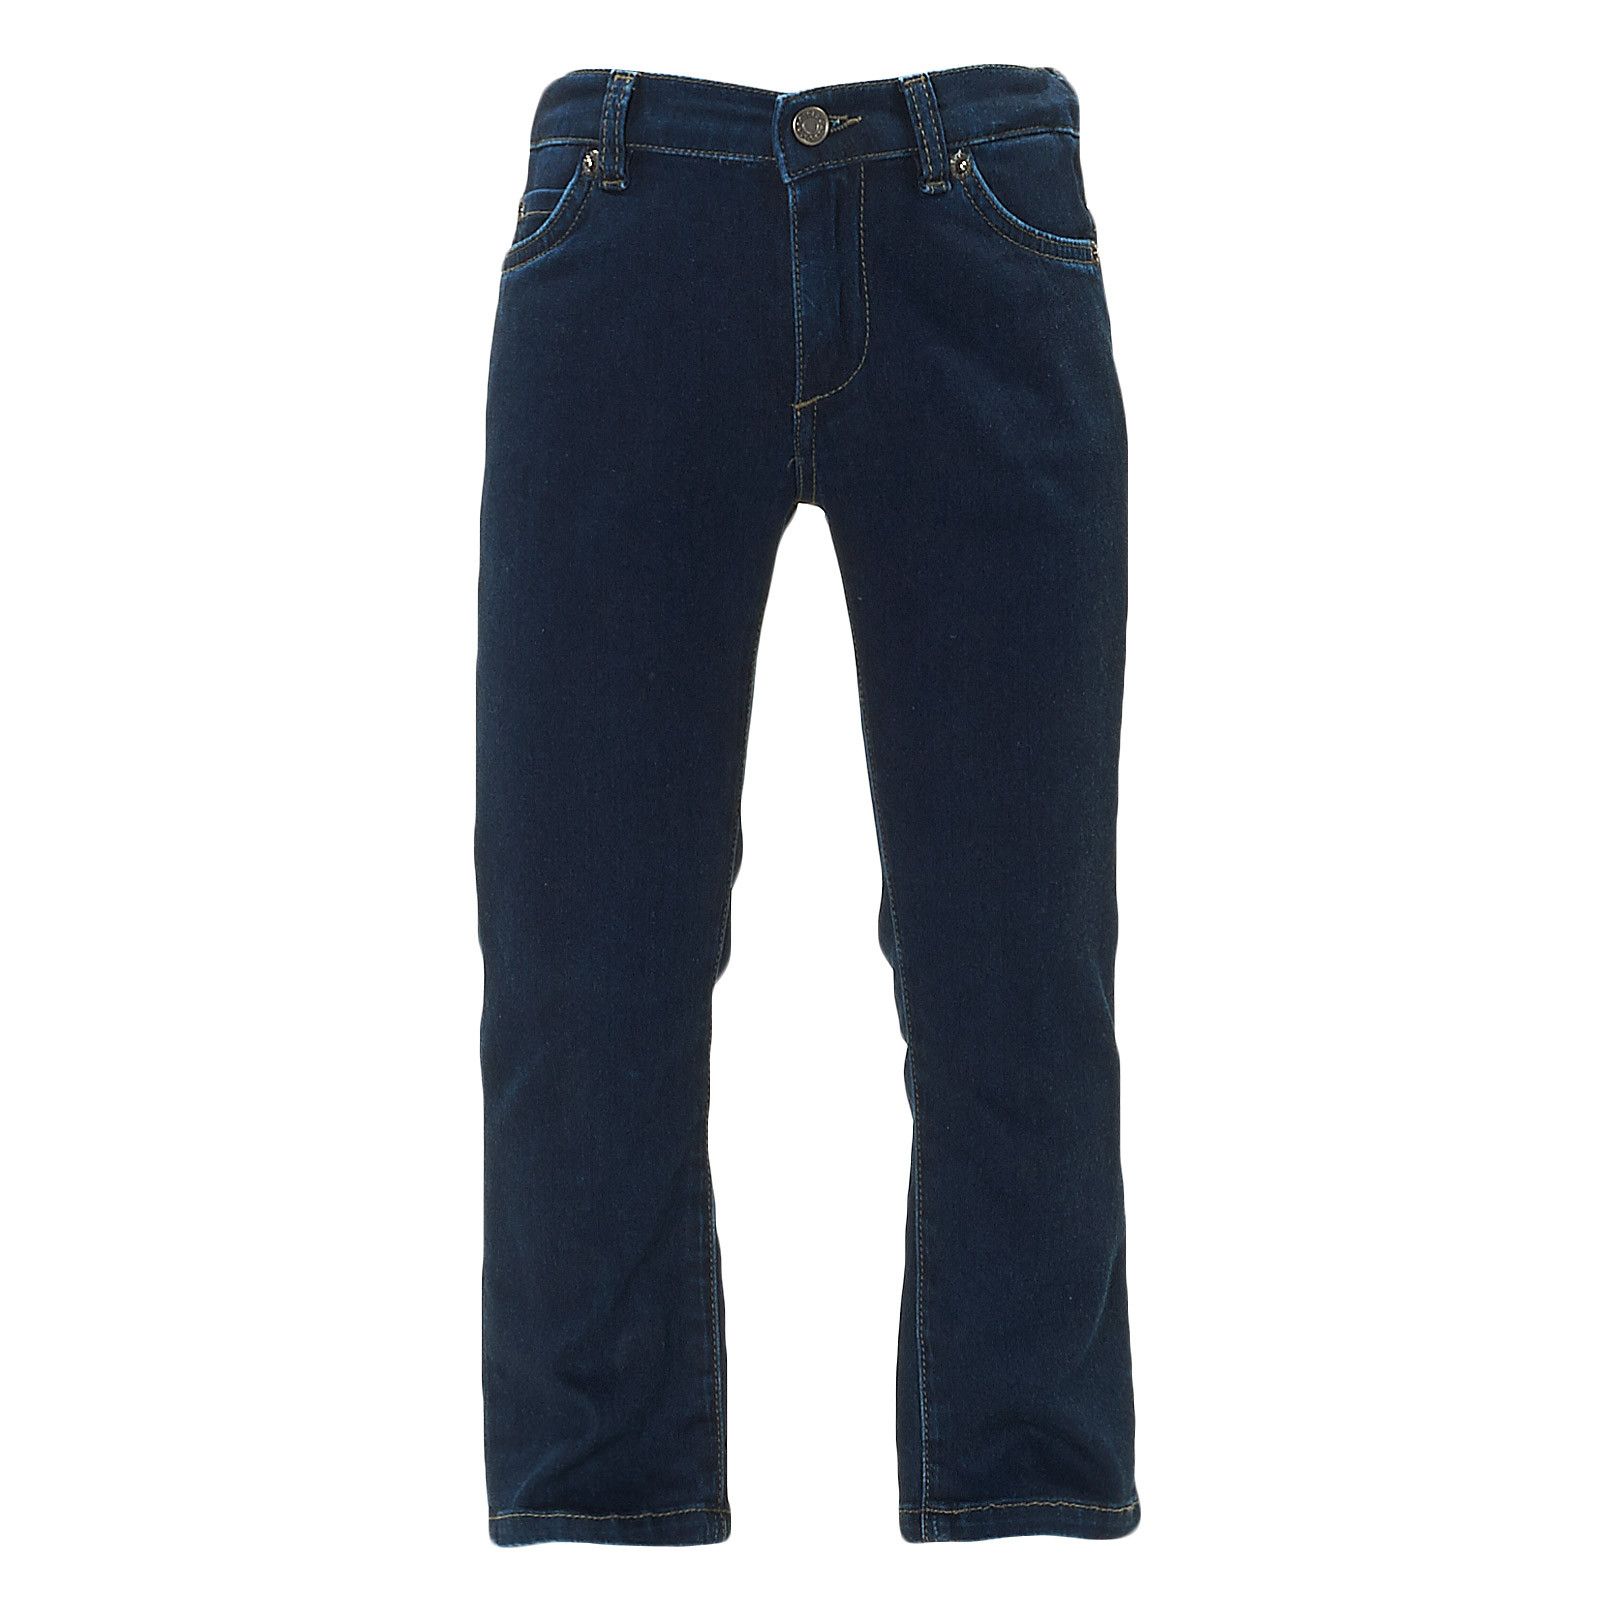 Boys Navy Blue Cotton Jersey Jeans - CÉMAROSE | Children's Fashion Store - 1